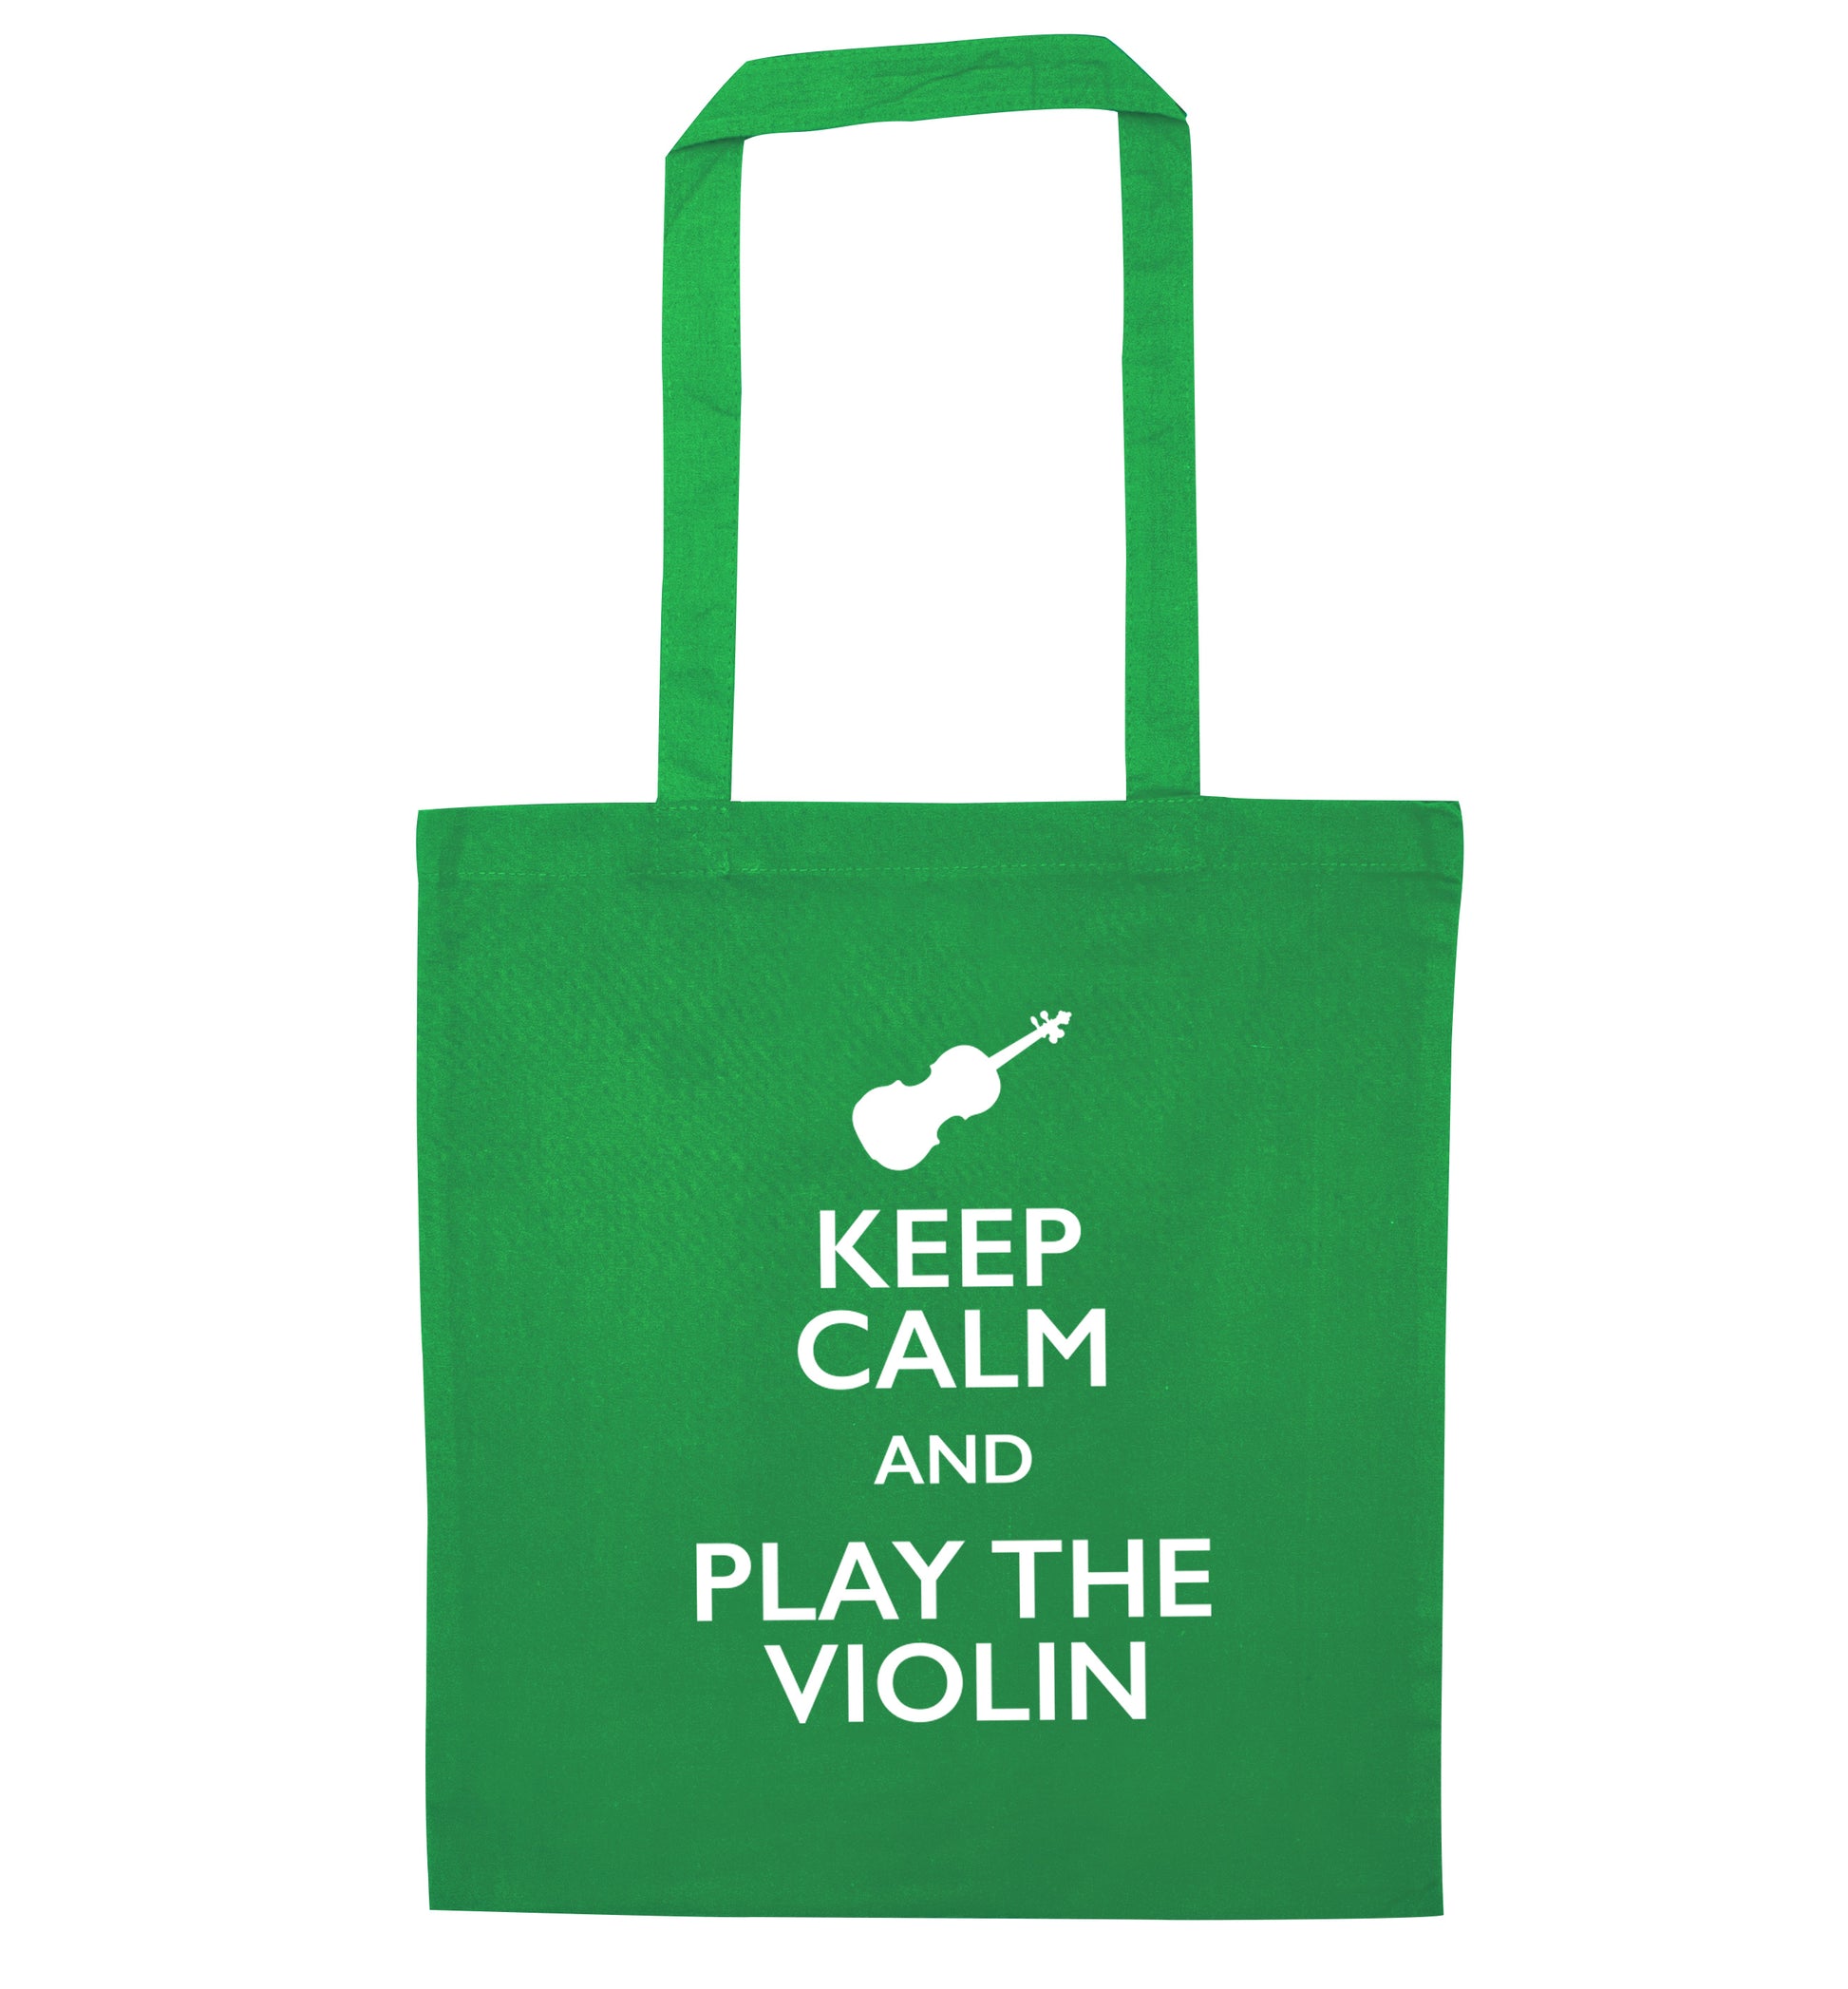 Keep calm and play the violin green tote bag